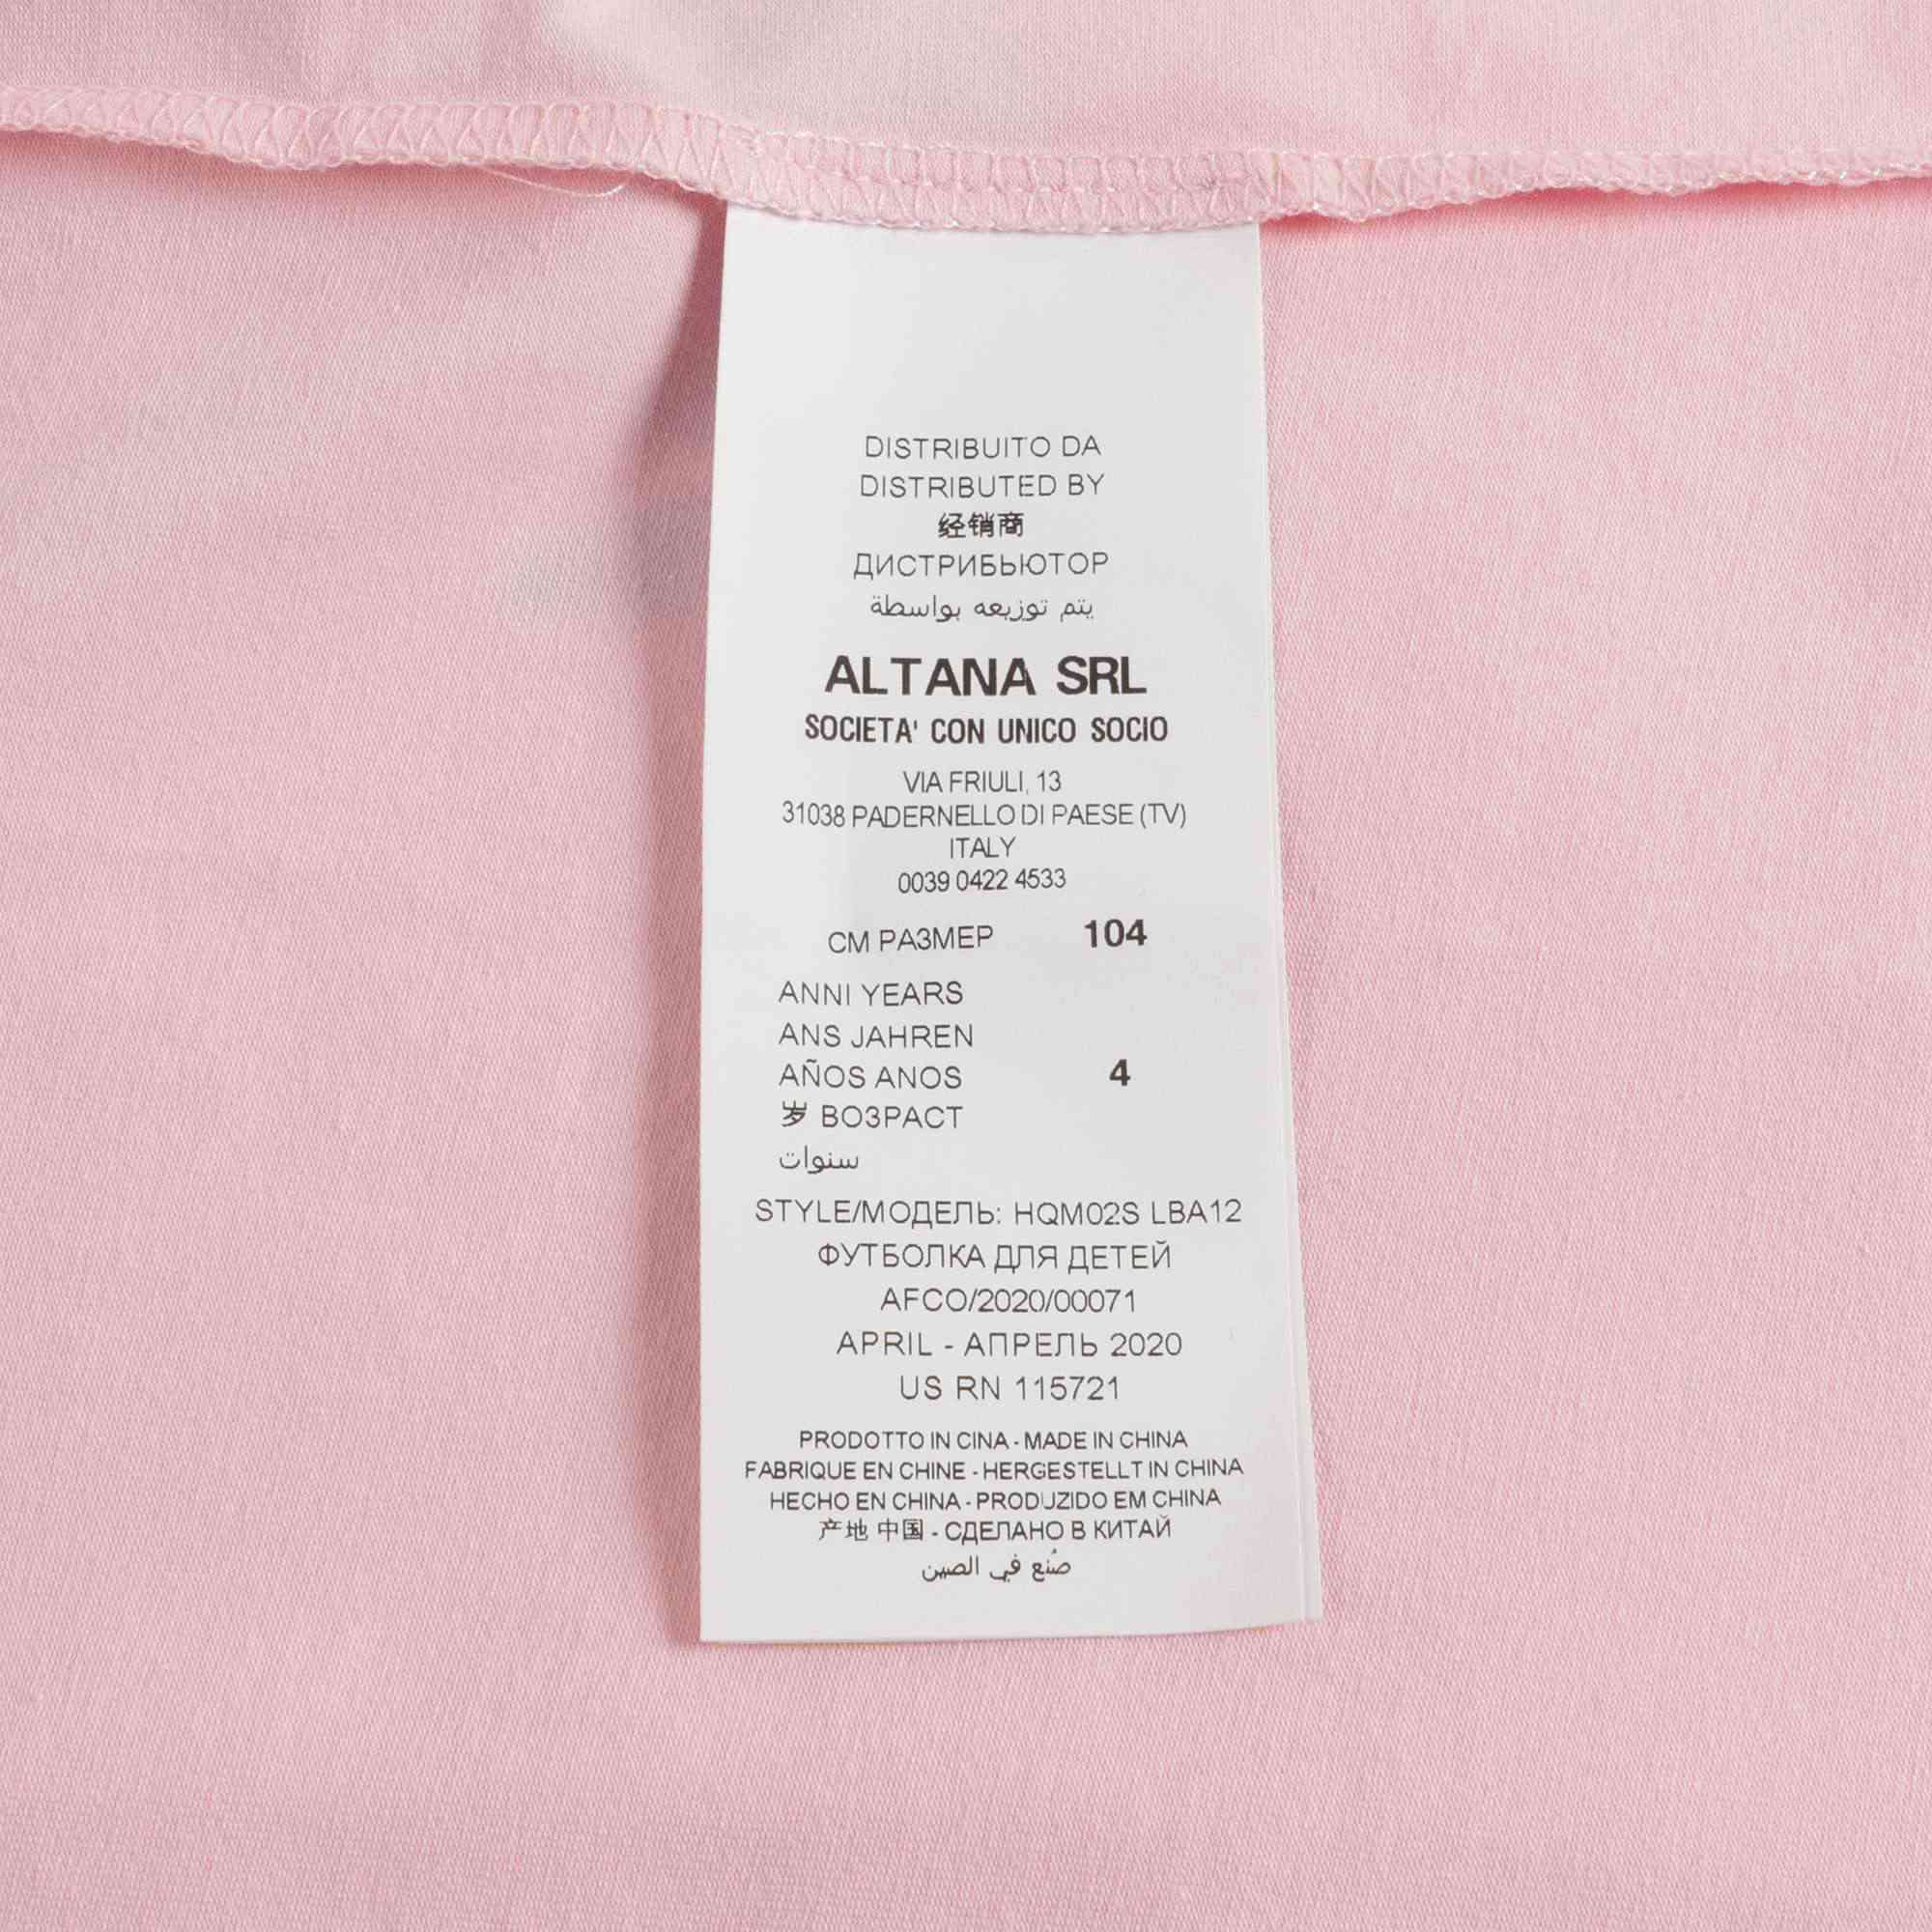 Girls Pink Teddy T-Shirt